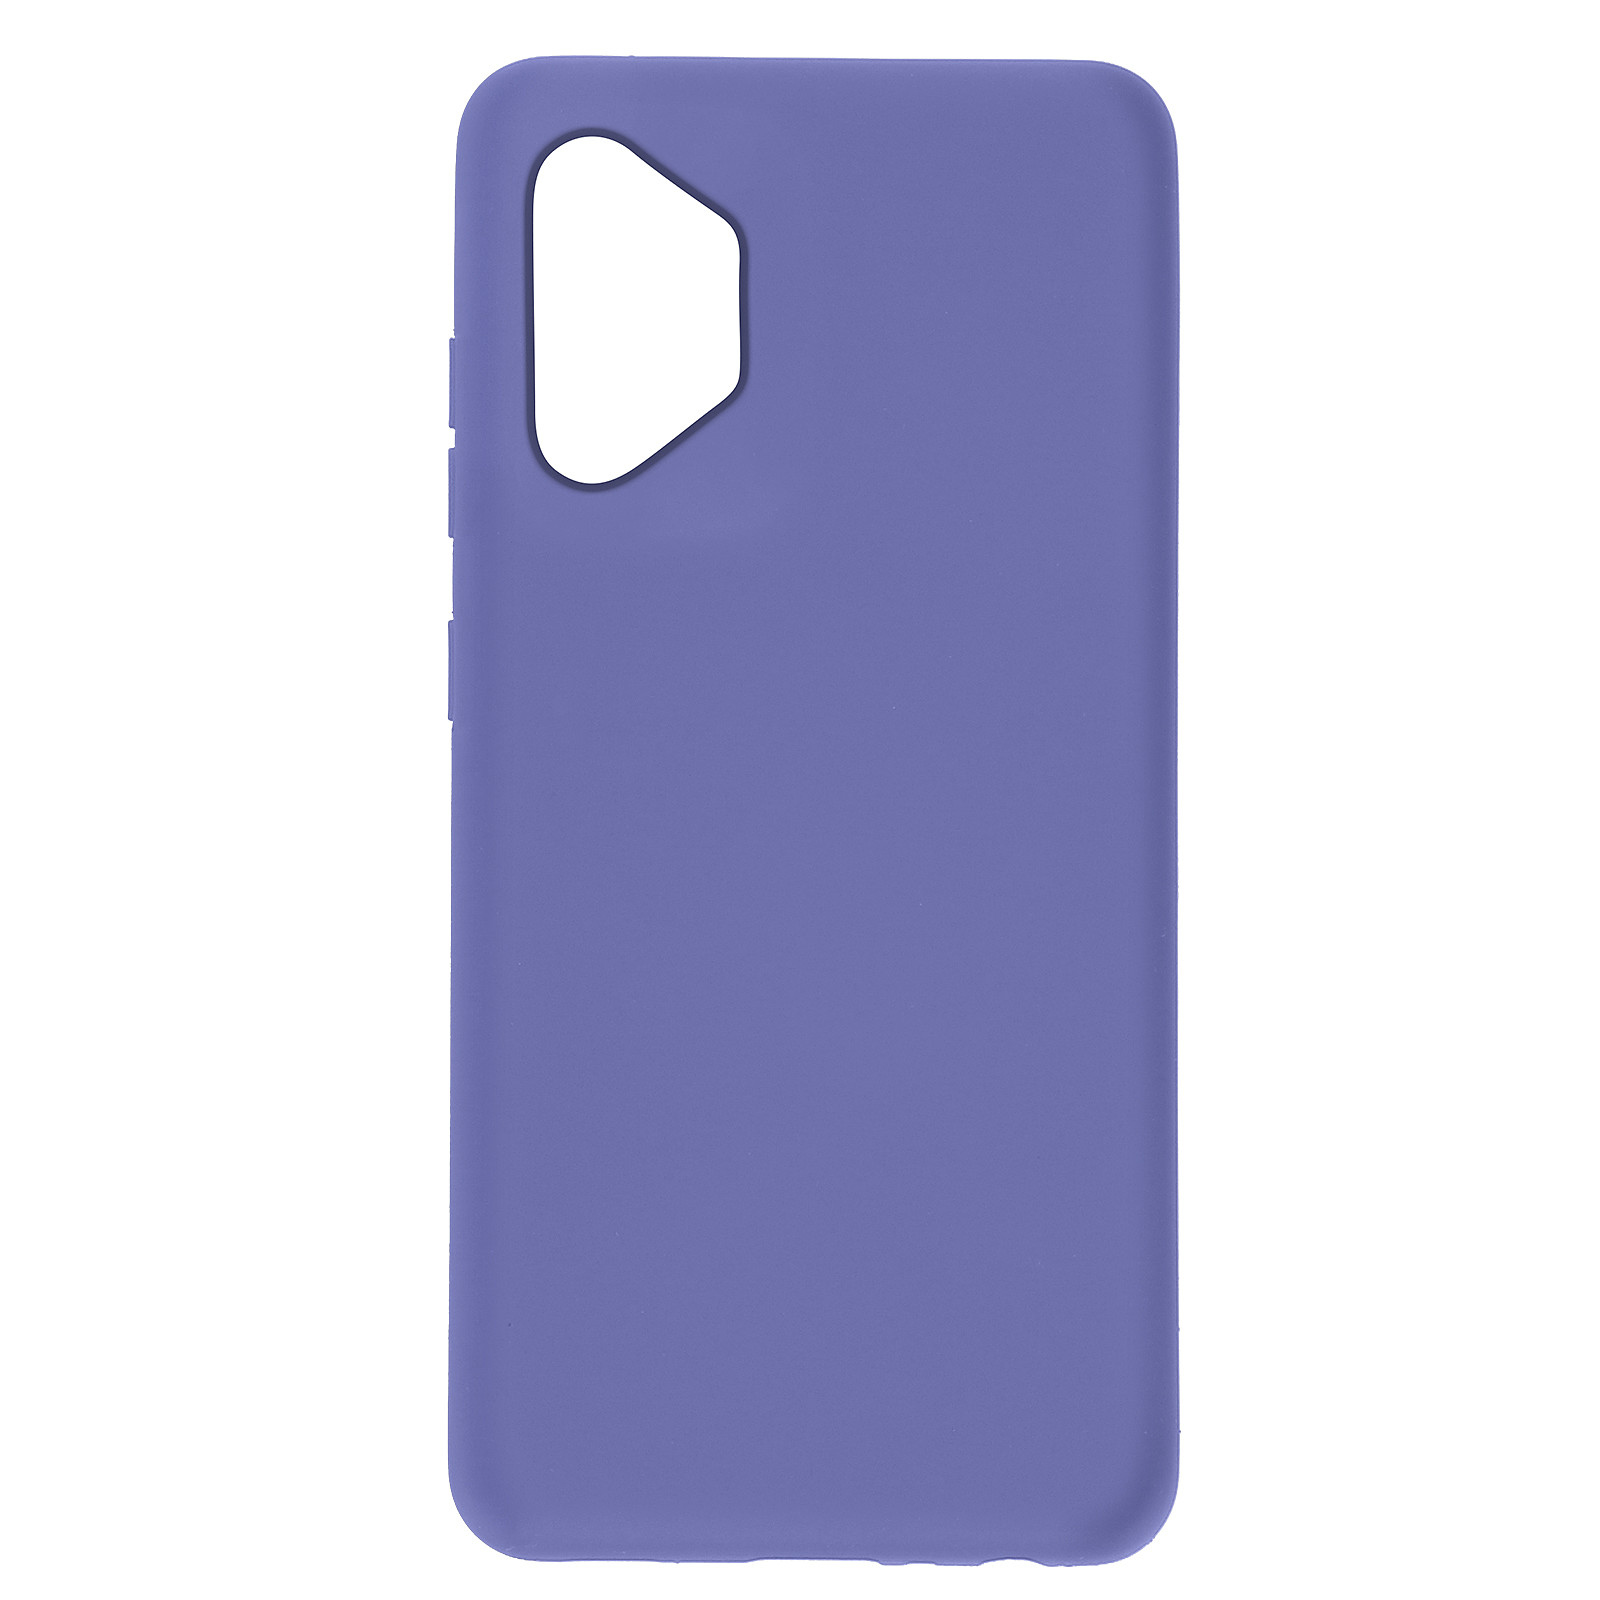 Avizar Coque pour Samsung Galaxy A32 5G Silicone Semi-rigide Finition Soft Touch Fine violet - Coque telephone Avizar